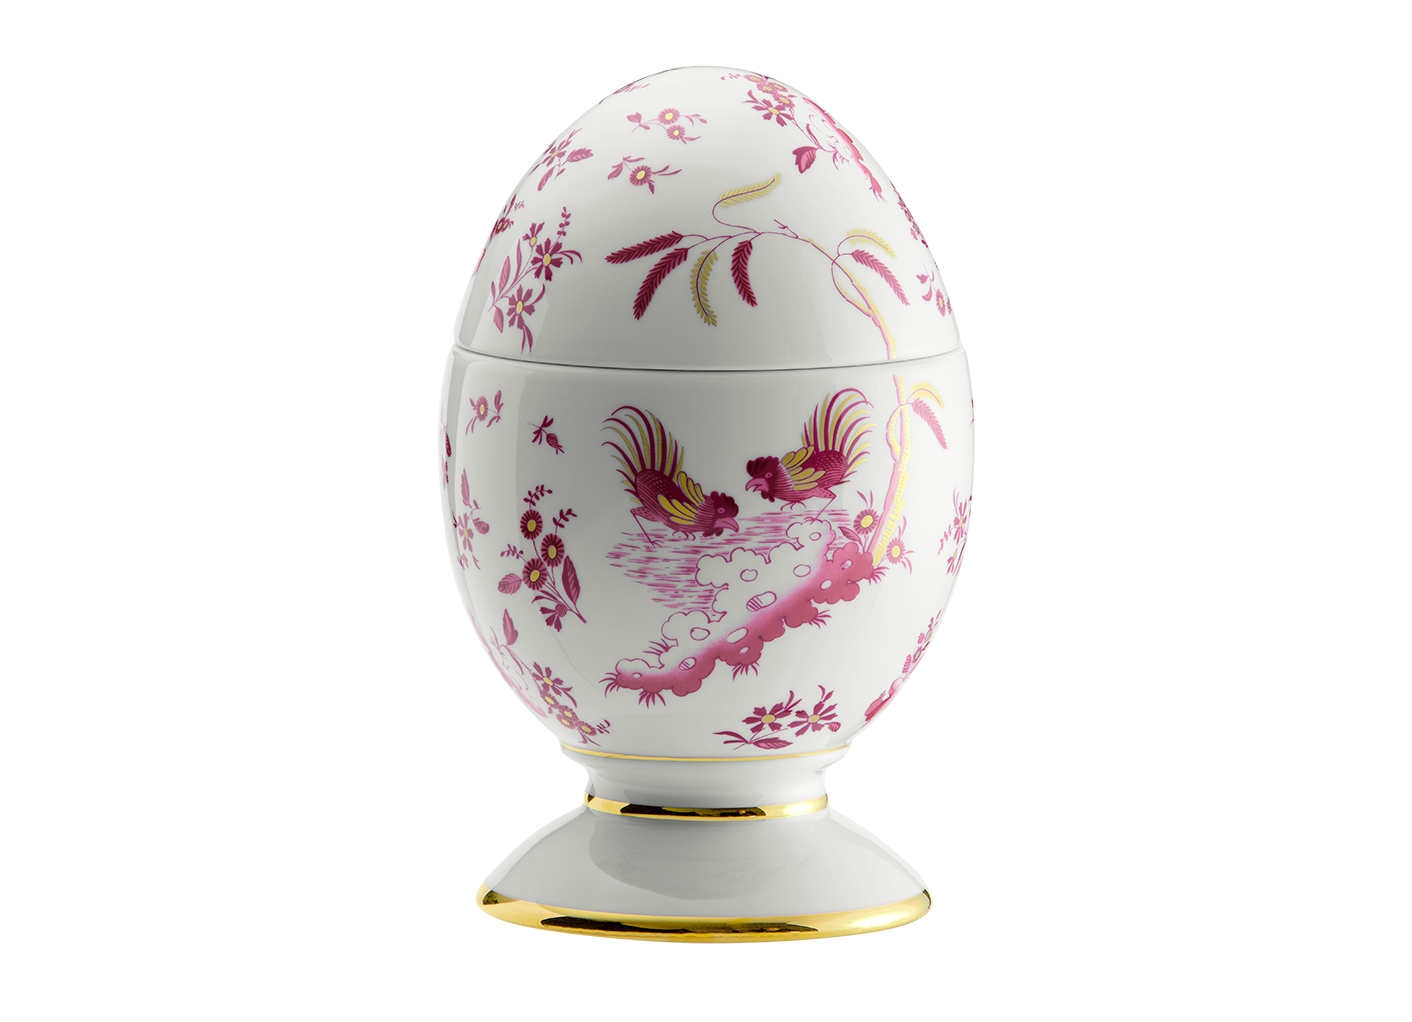 Richard Ginori Uova (Egg) Collection | Gracious Style